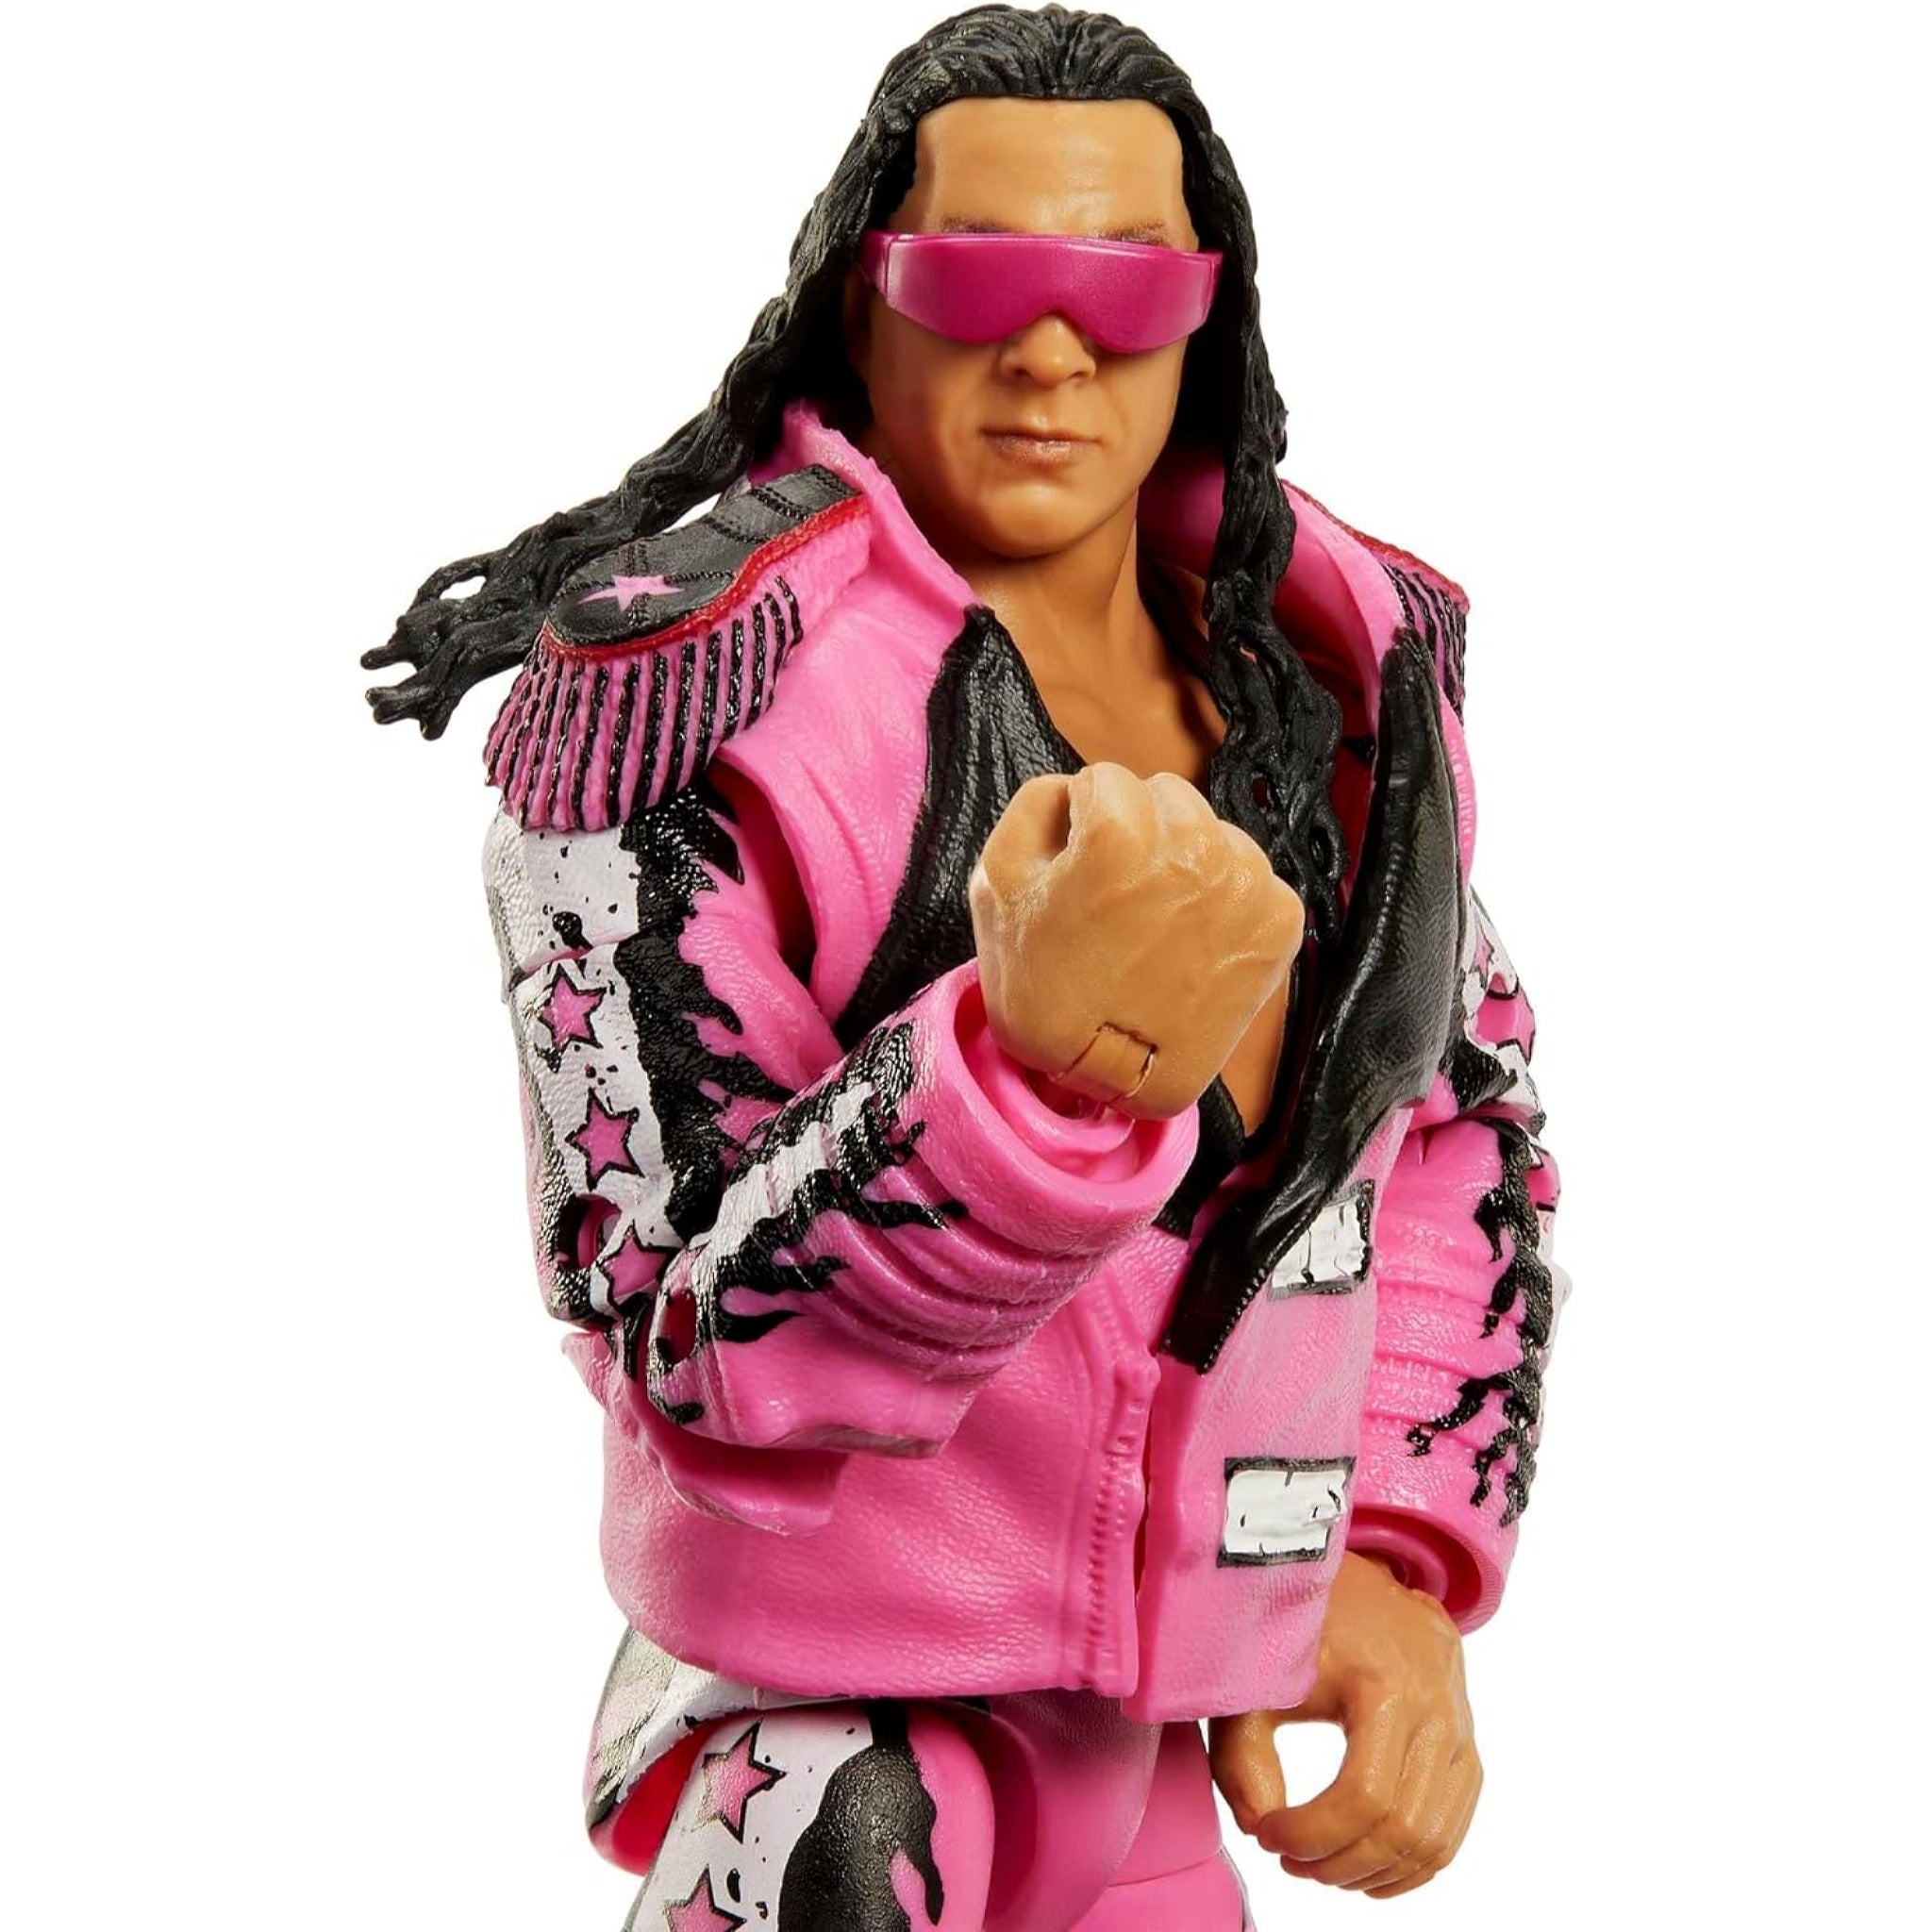 WWE Bret “Hit Man” Hart Legends Ultimate Edition Action Figure